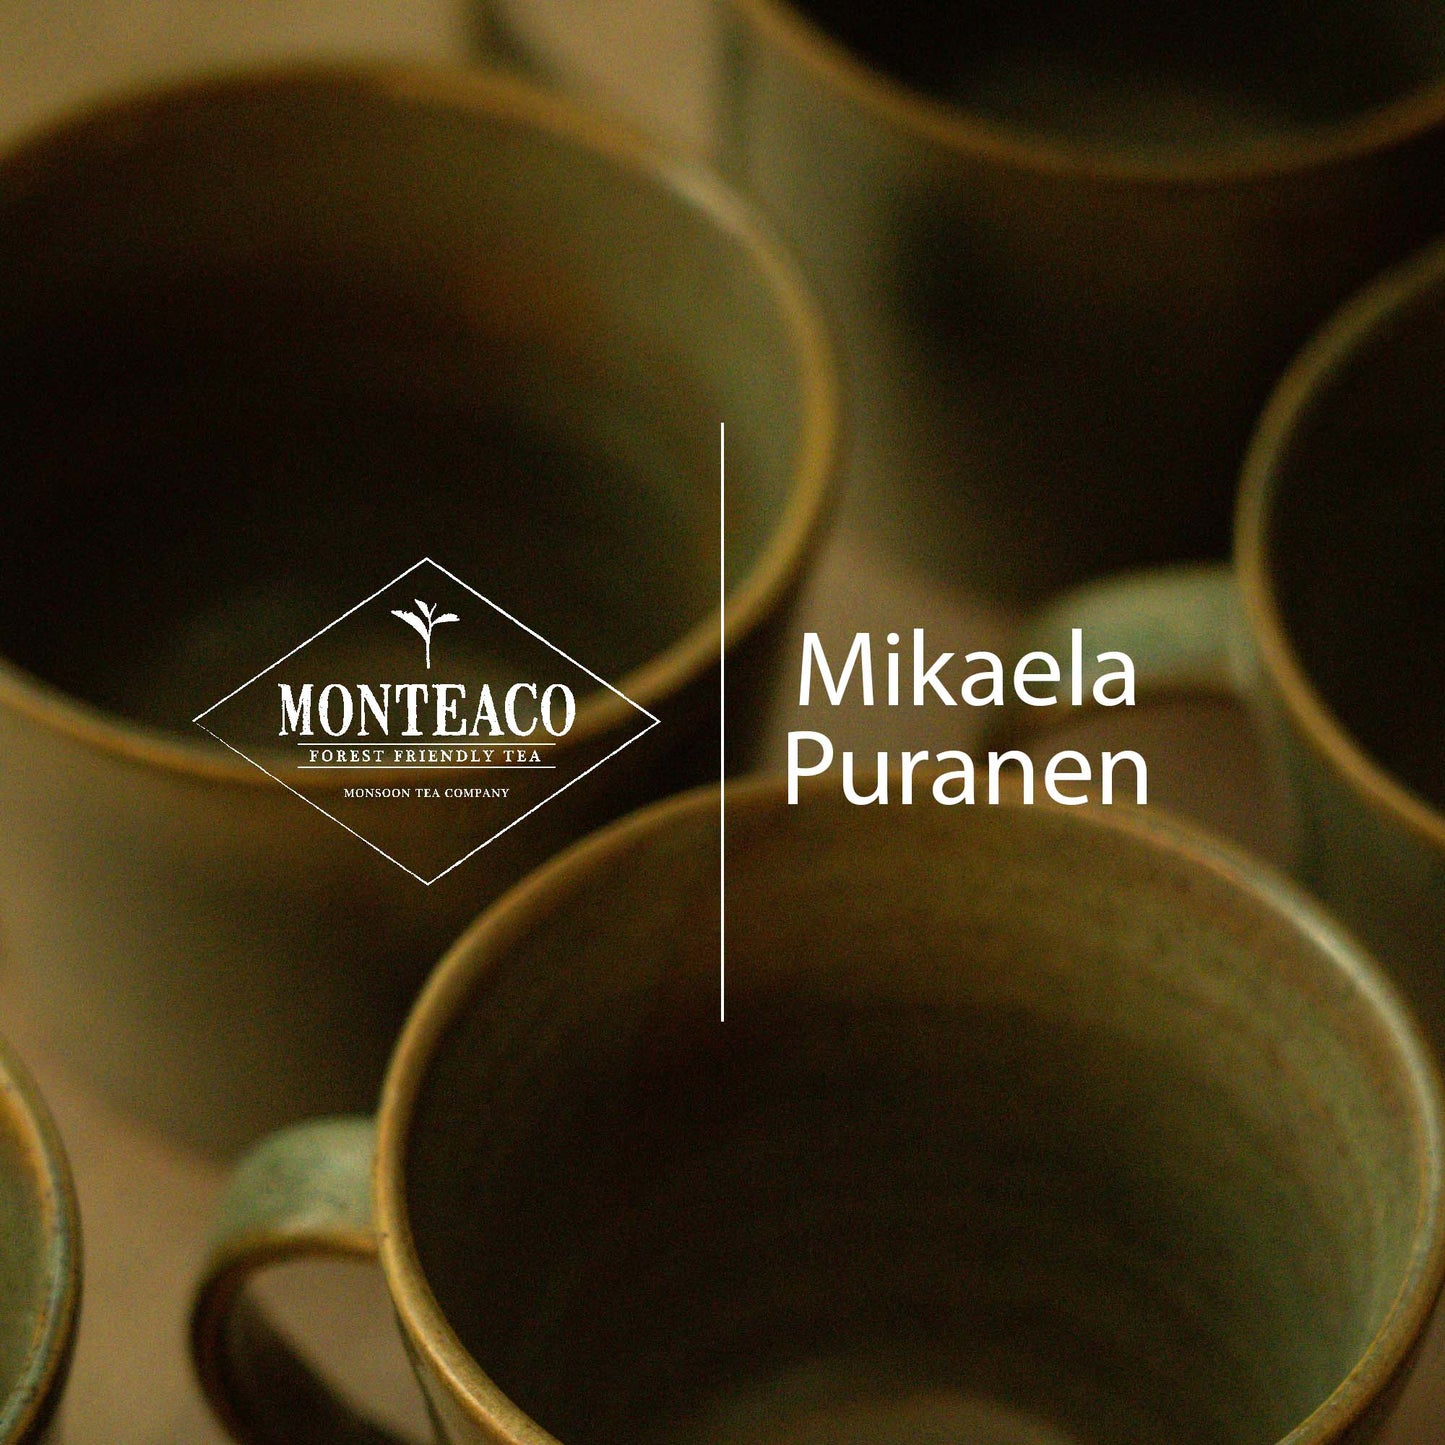 Mikaela Puranen for Monteaco